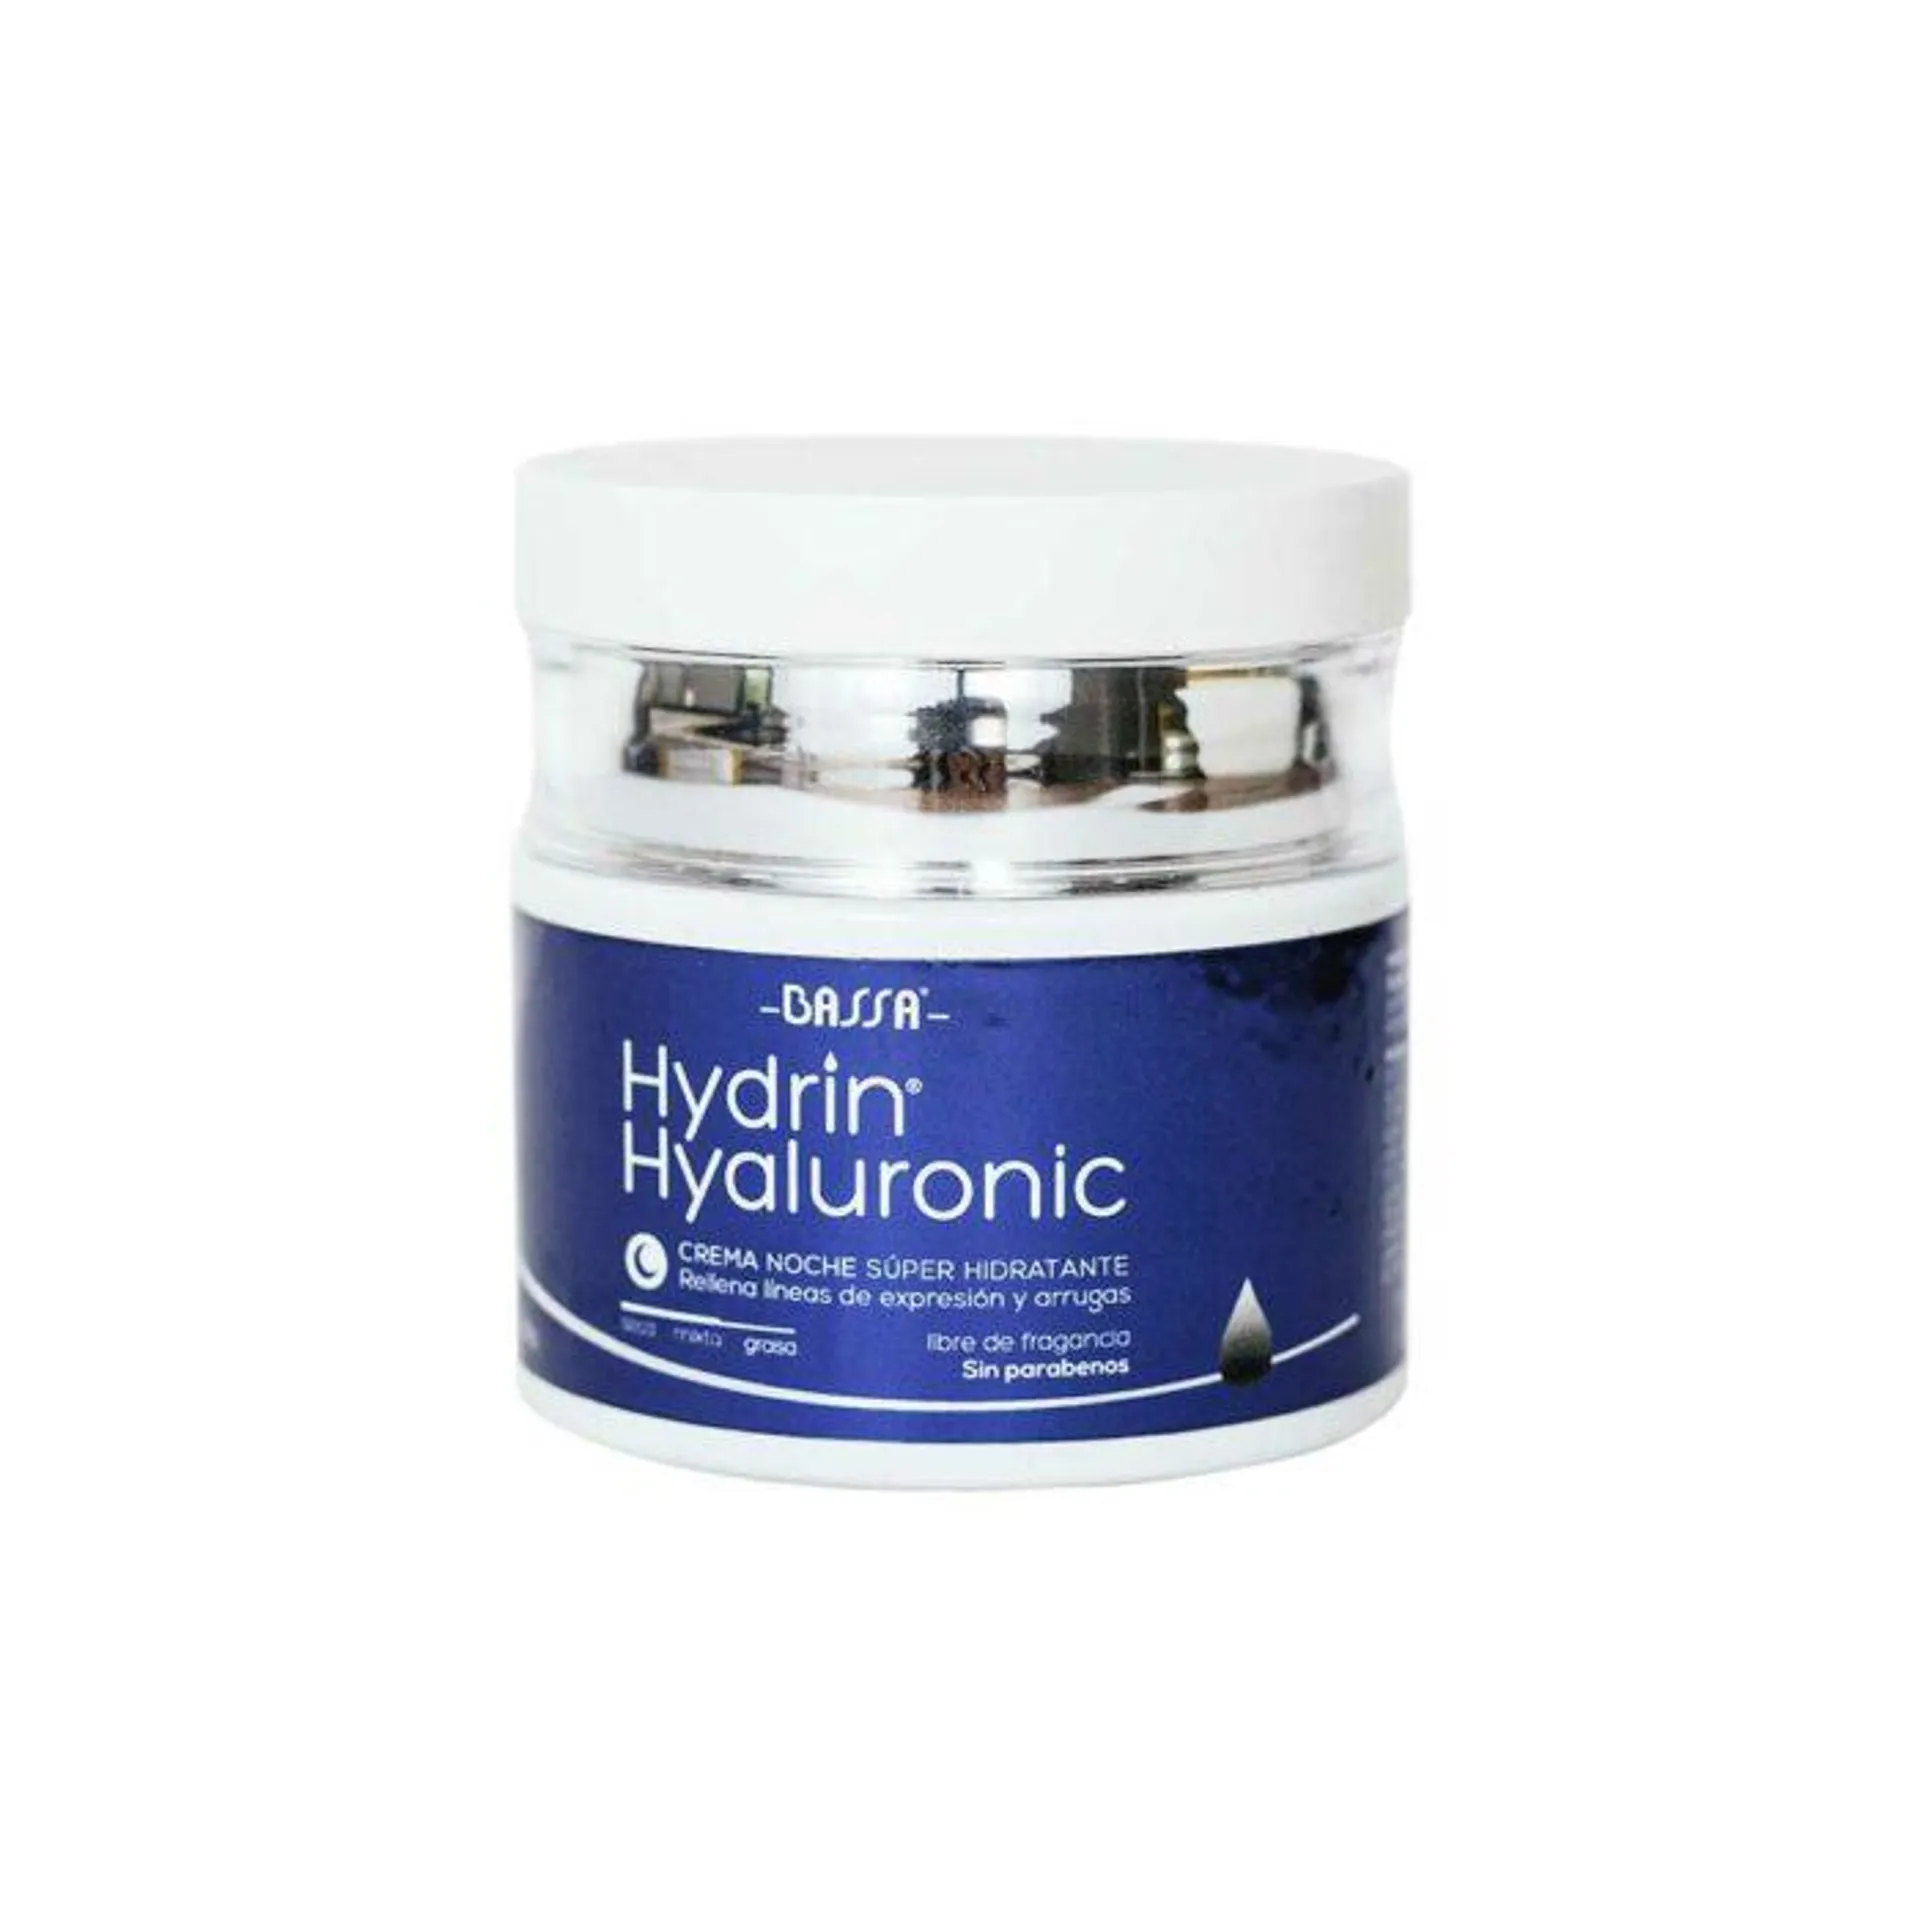 Hydrin Hyaluronic Crema Noche